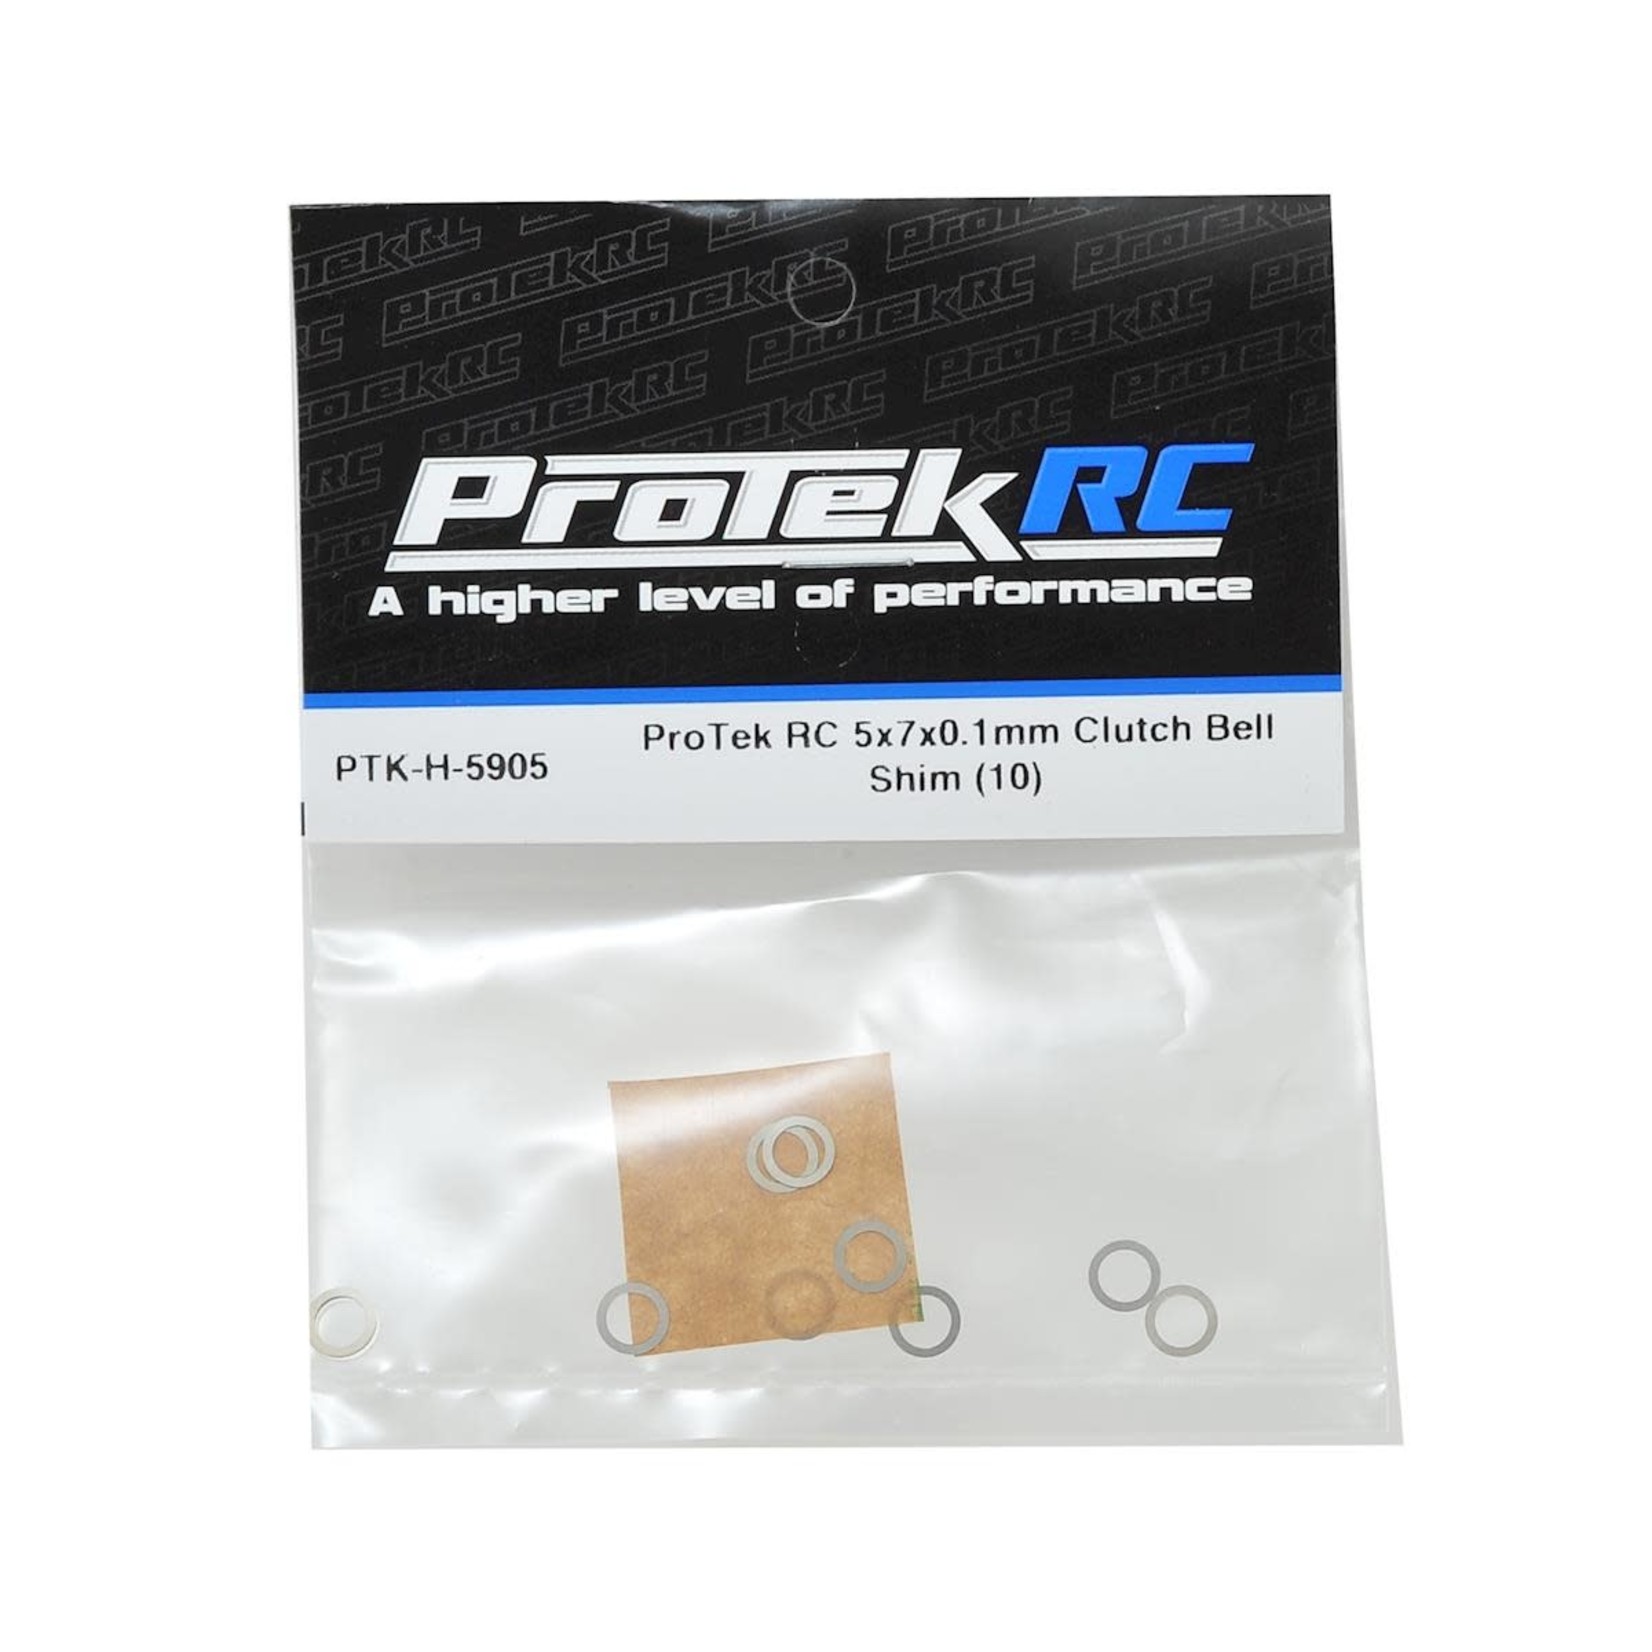 ProTek RC ProTek RC 5x7x0.1mm Clutch Bell Shim (10) #PTK-H-5905